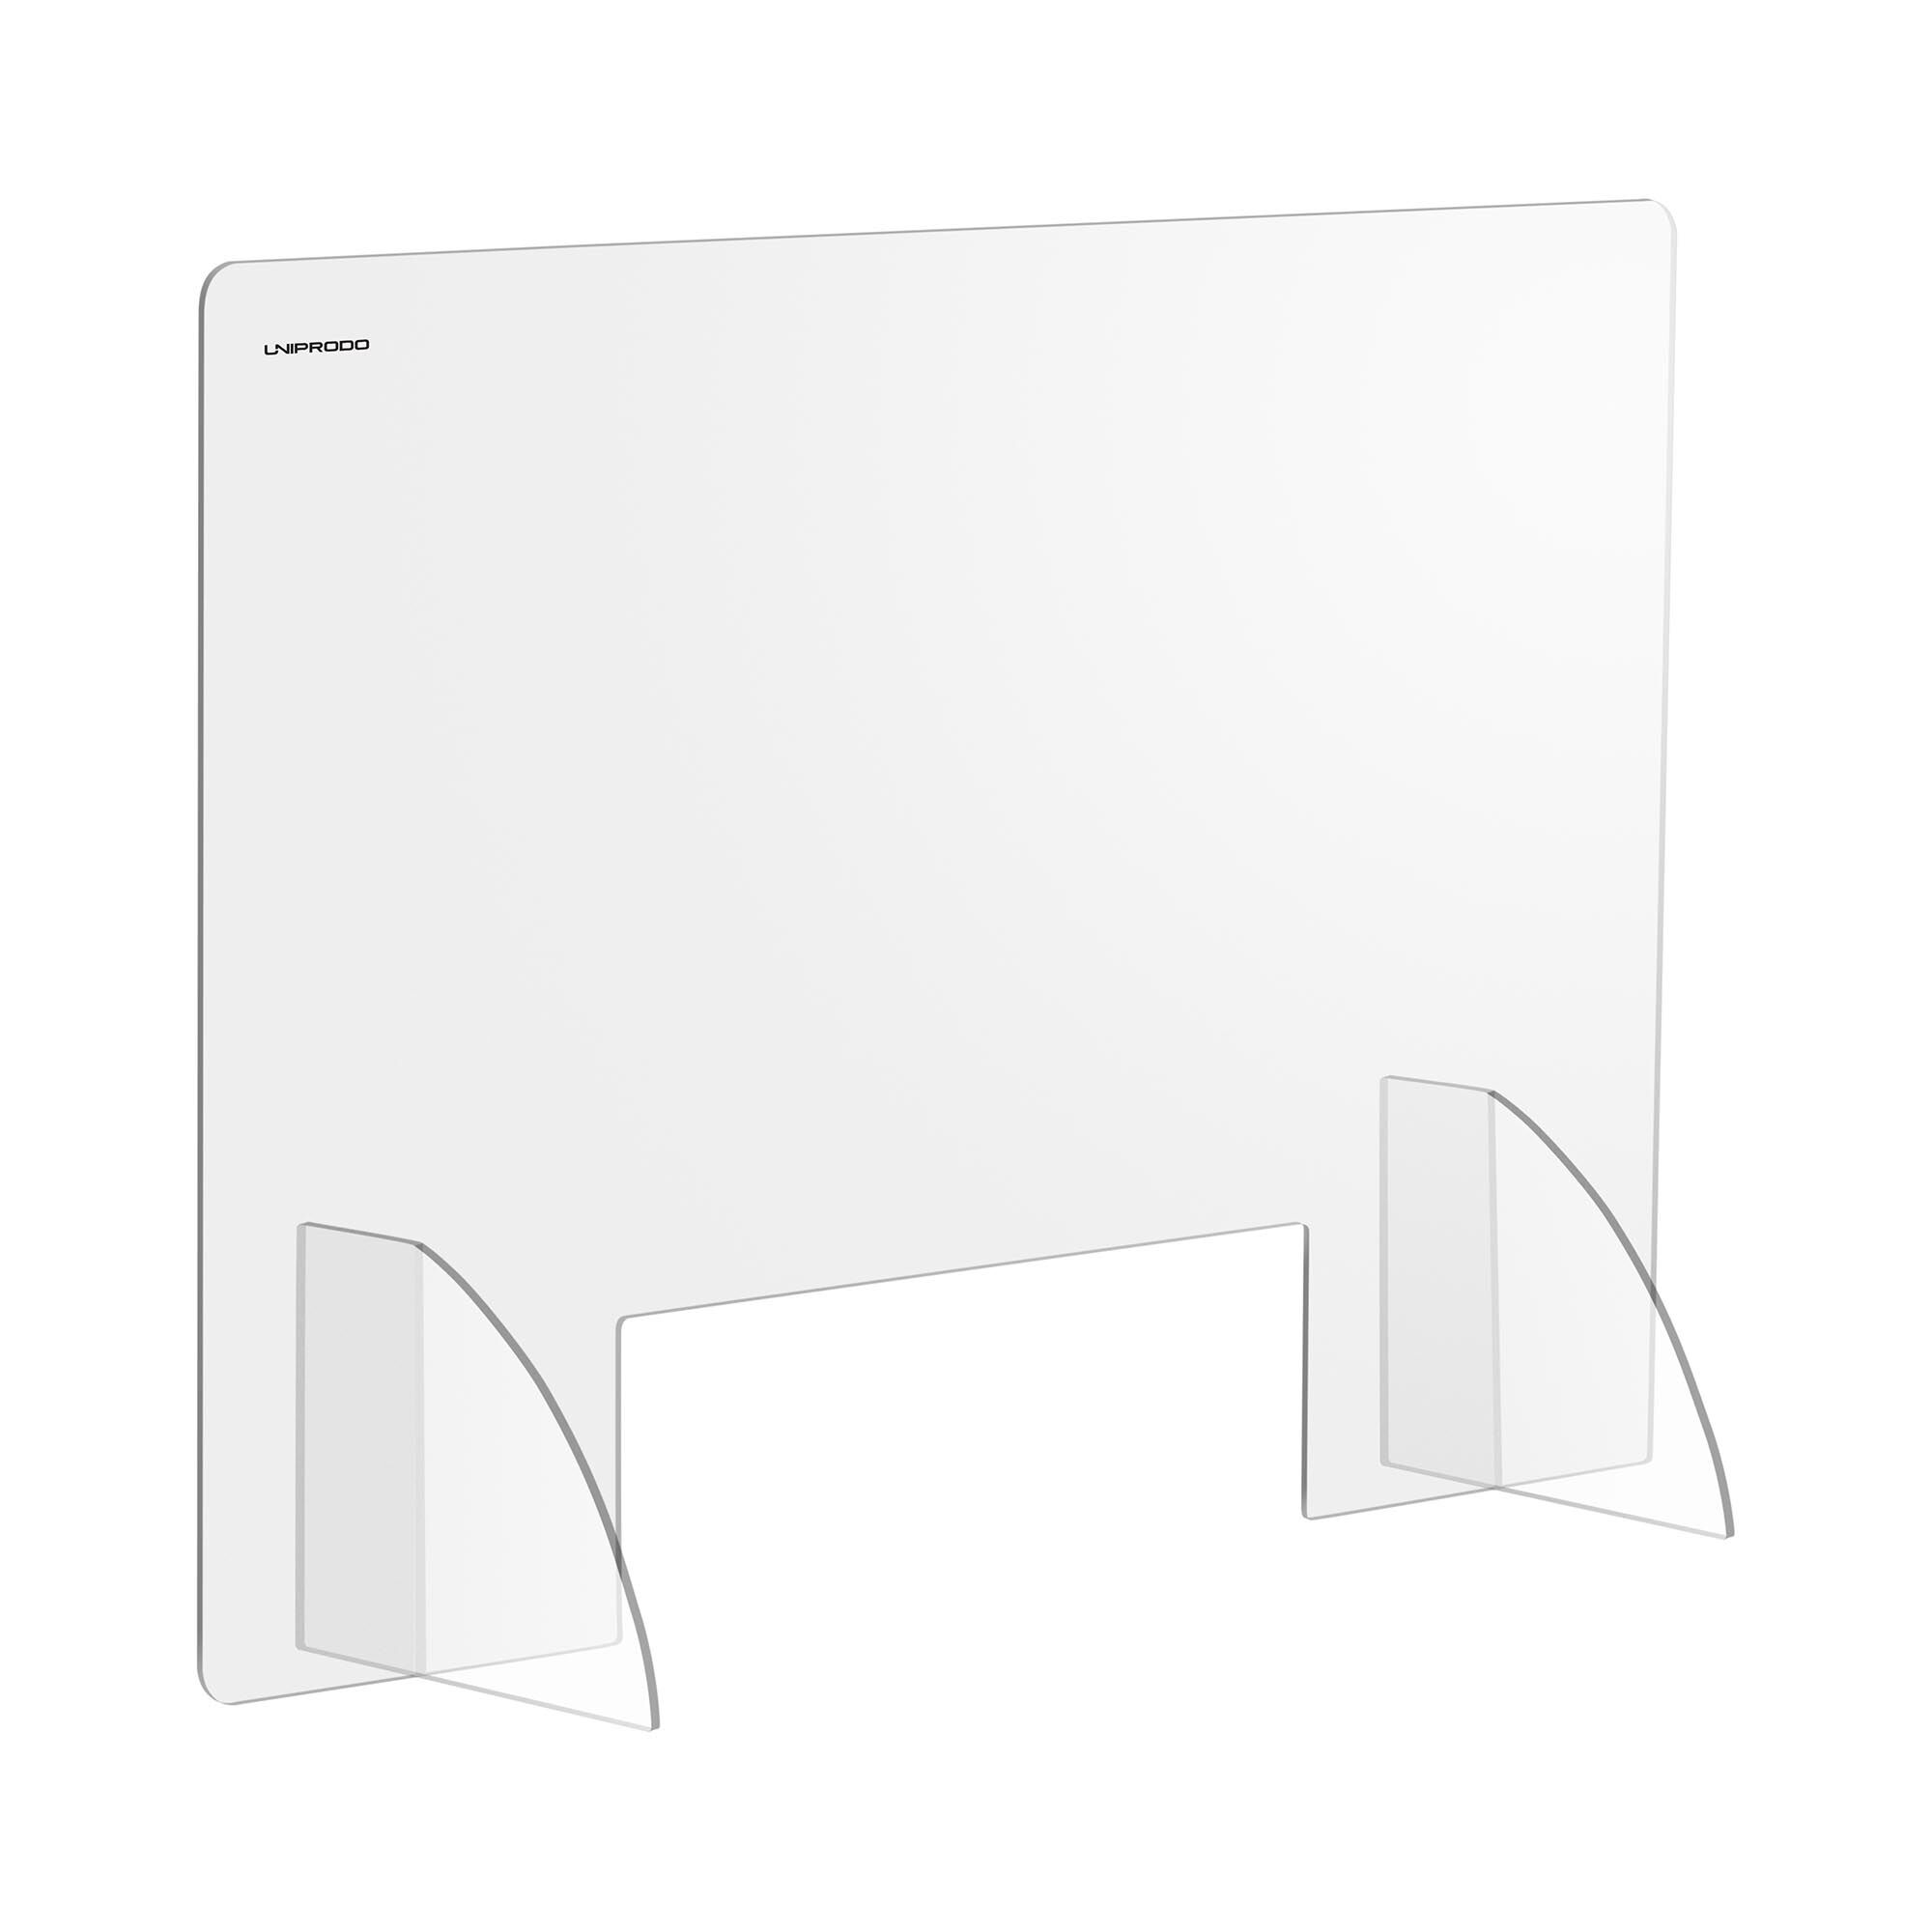 Uniprodo Ochranná přepážka - 95 x 65 cm - akrylátové sklo - výdejové okénko 30 x 10 cm UNI-PPG01